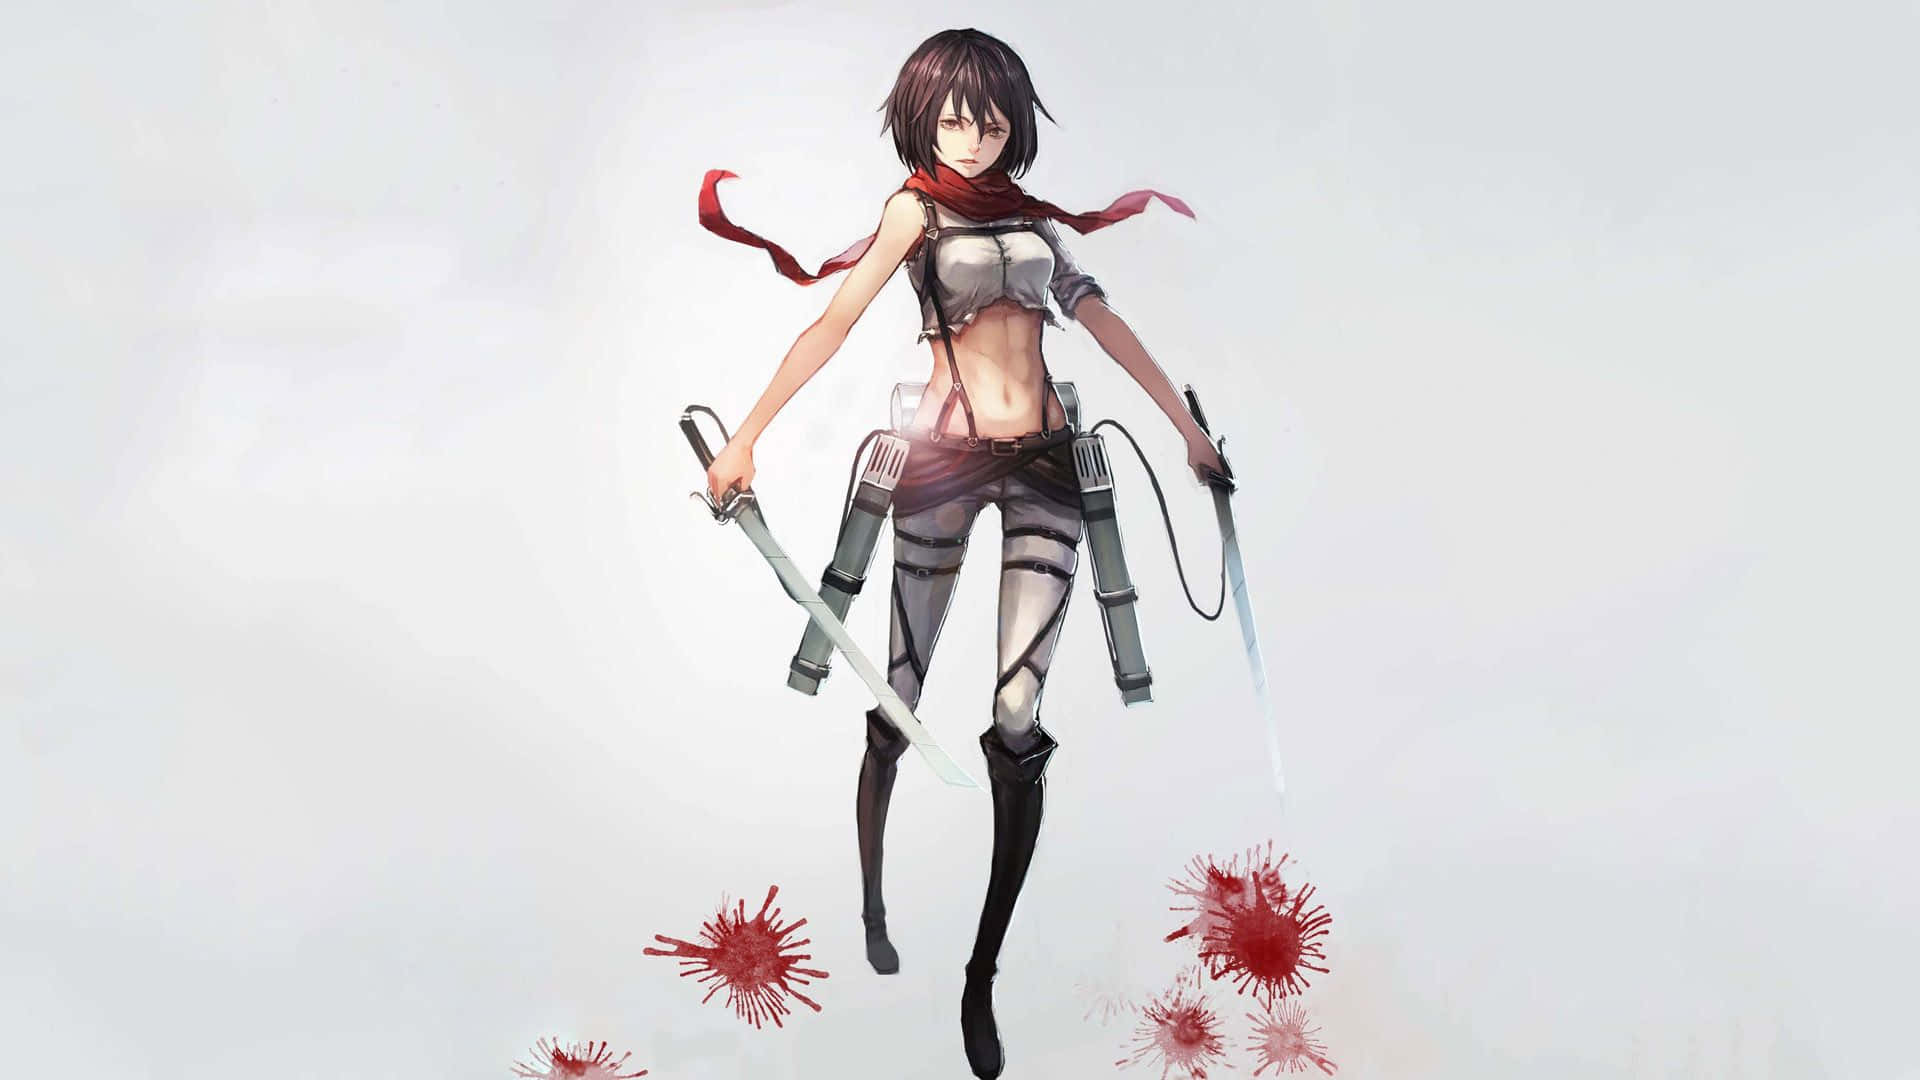 Mikasaprofilbild Med Blod. Wallpaper